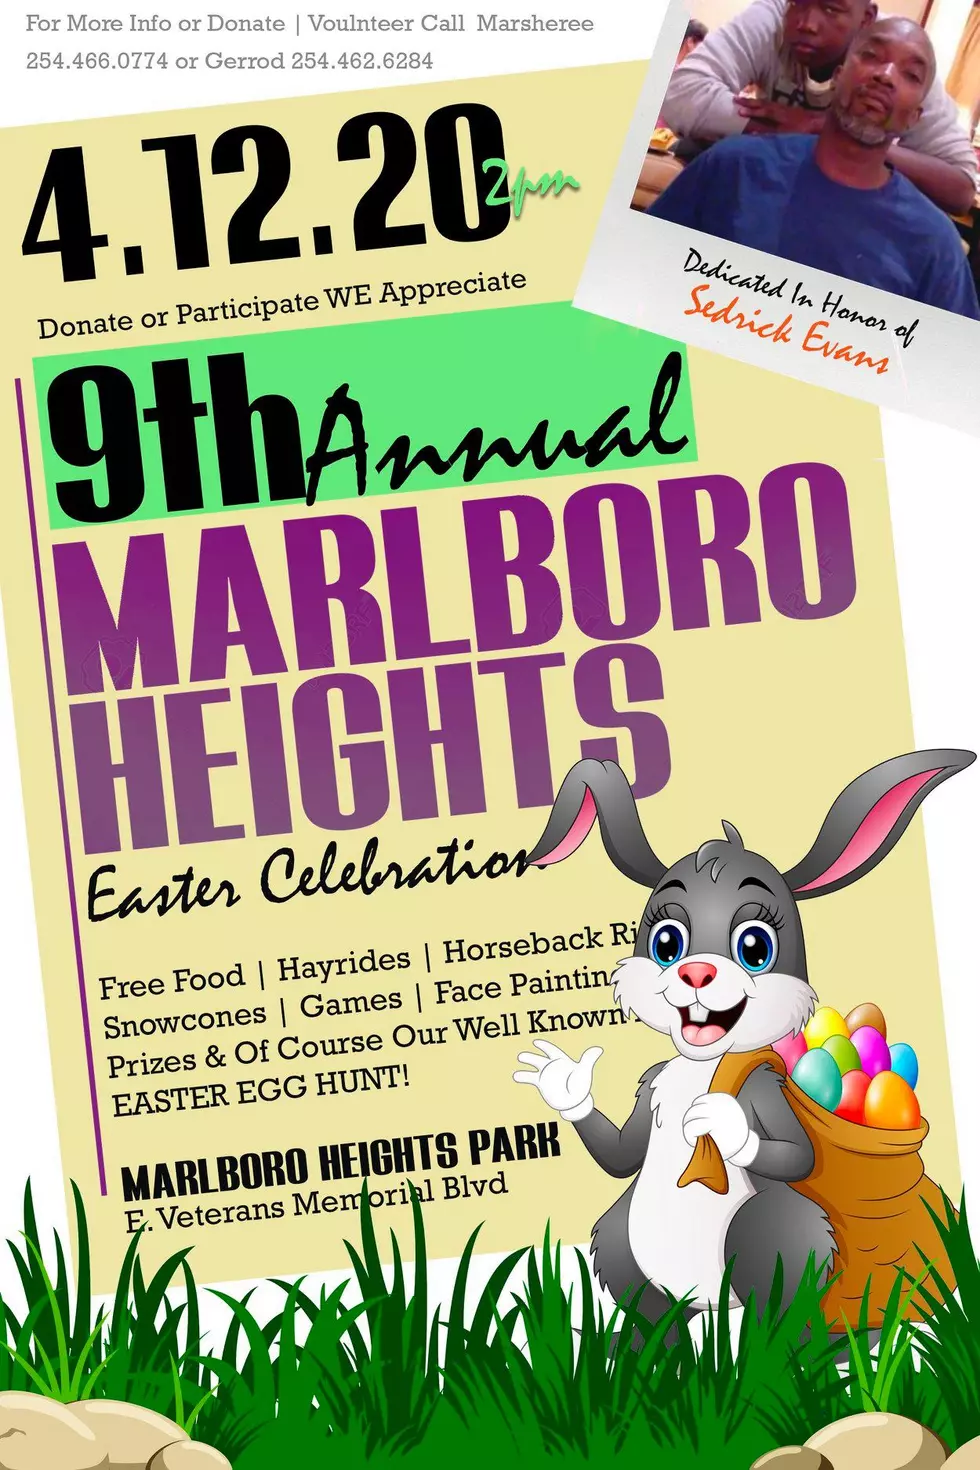 Killeen’s Marlboro Heights 9th Annual Easter Celebration